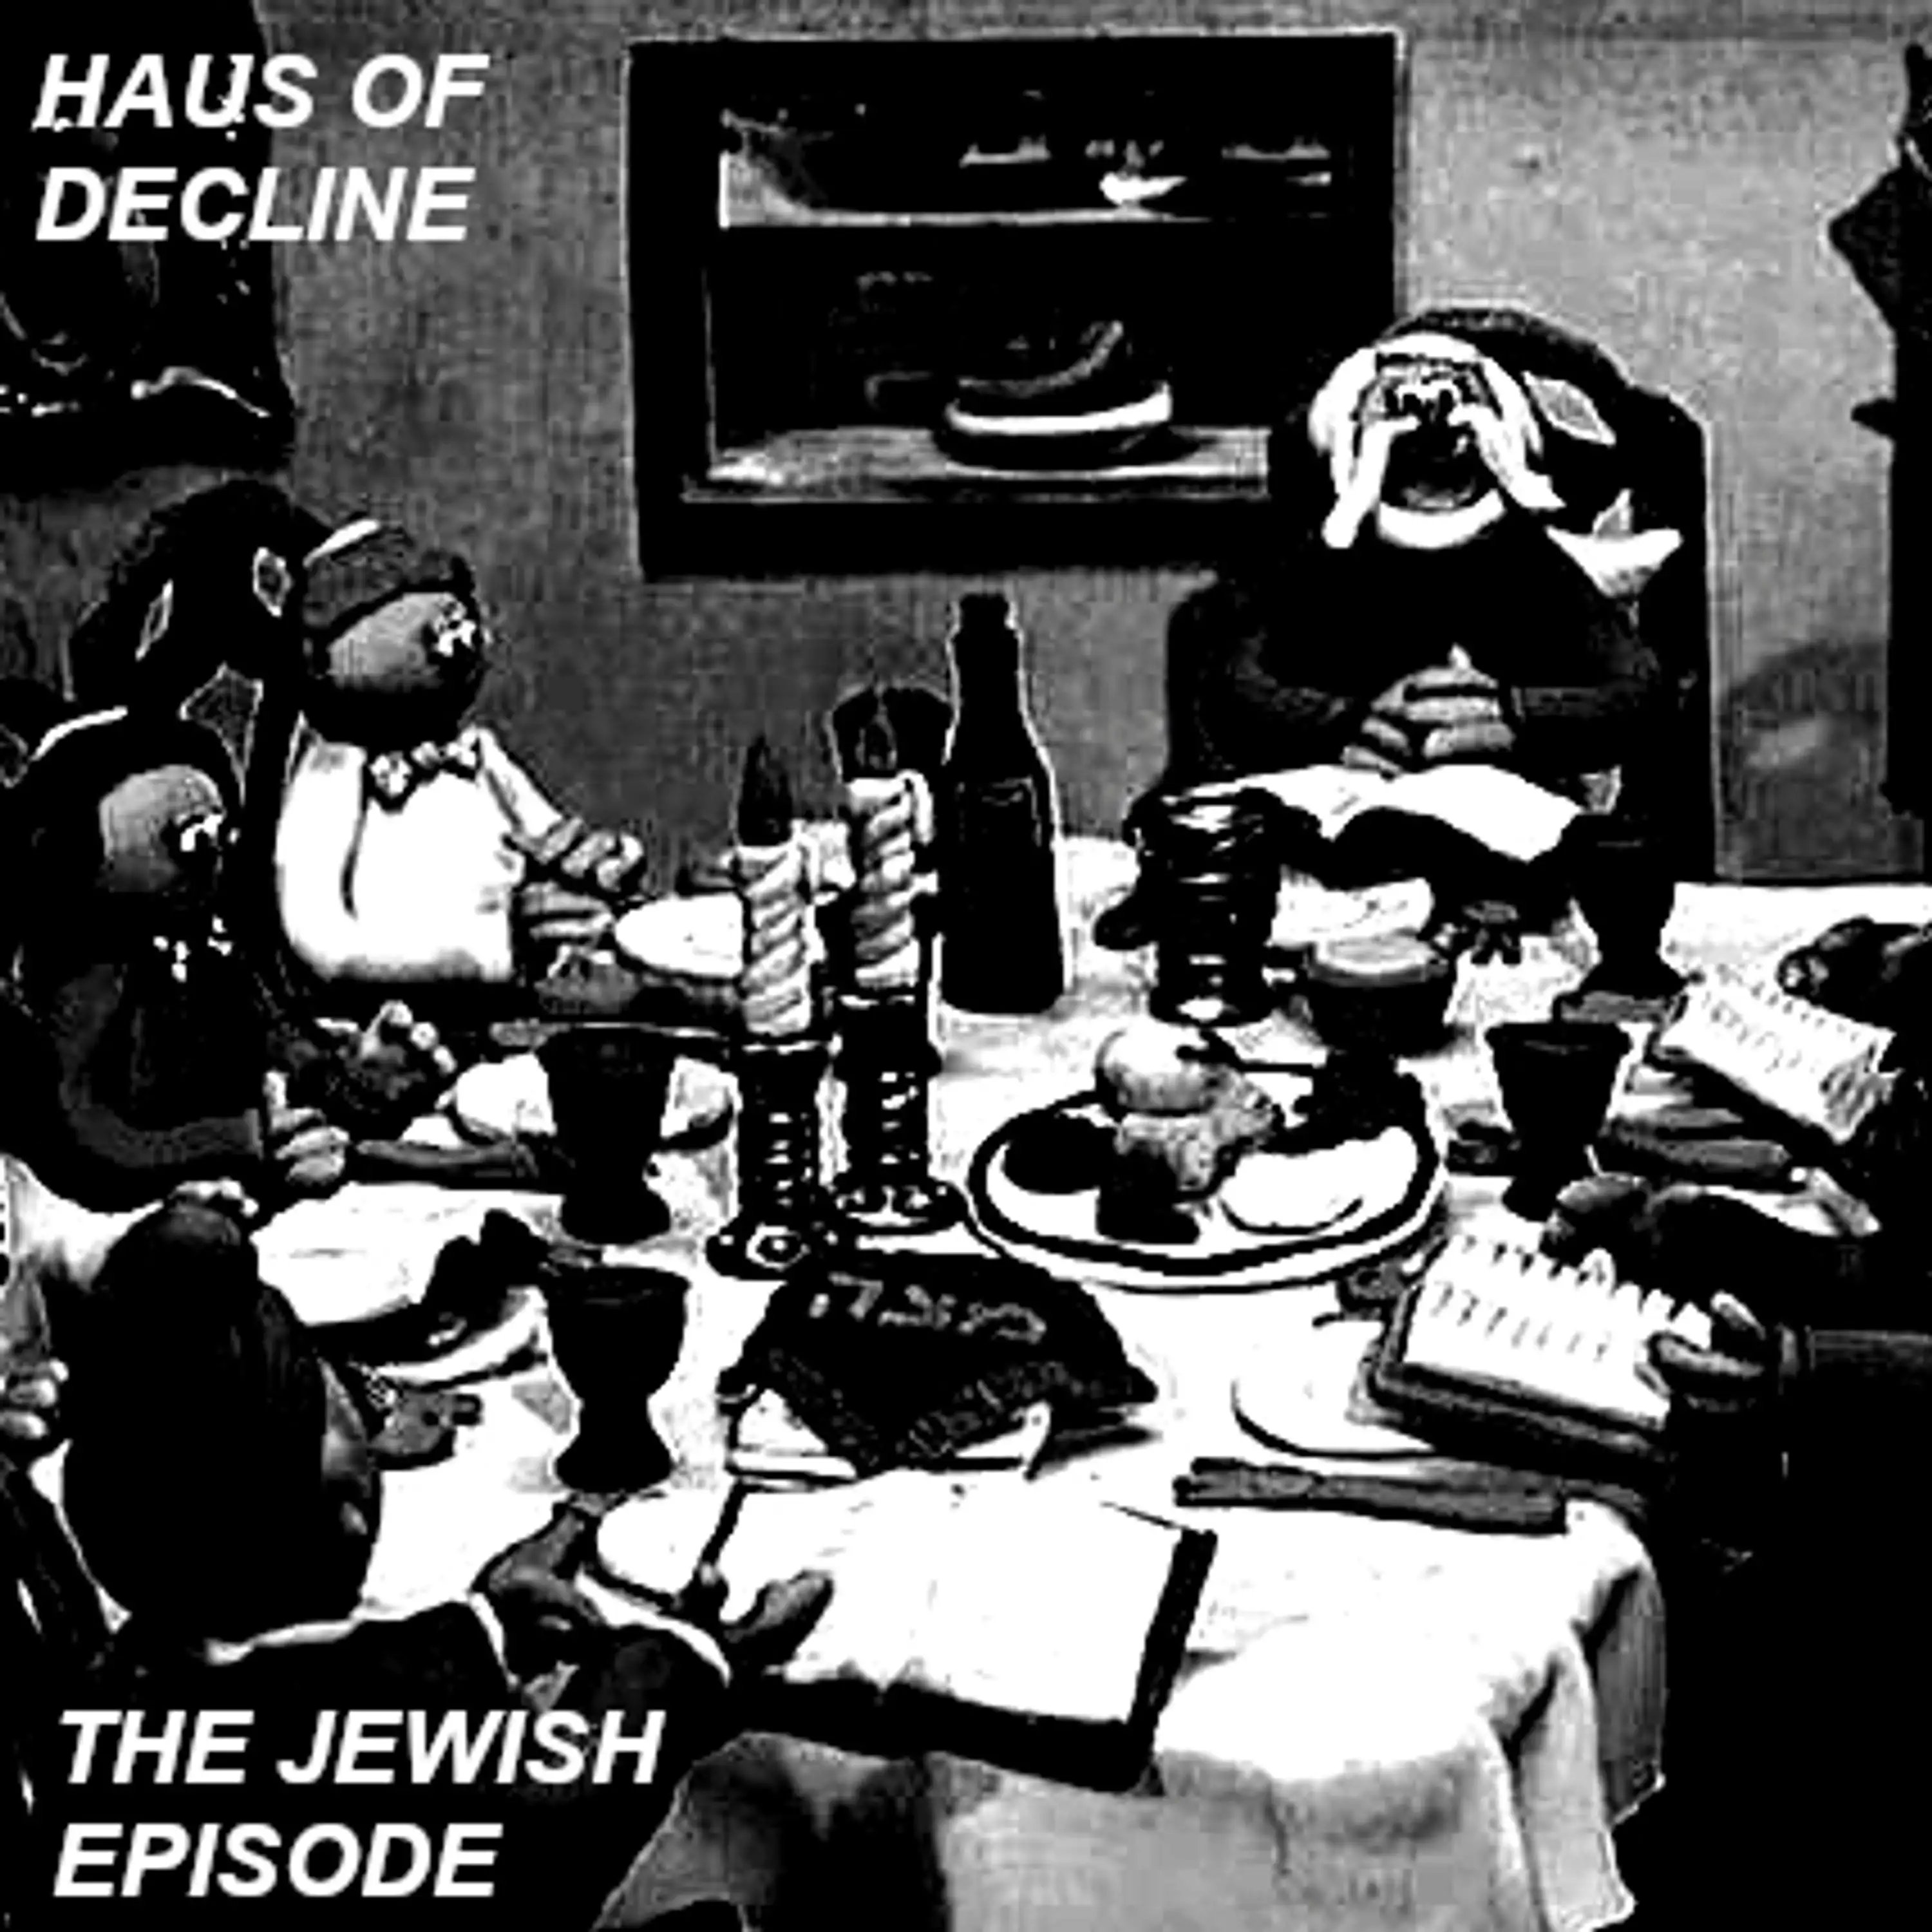 The Jewish Episode